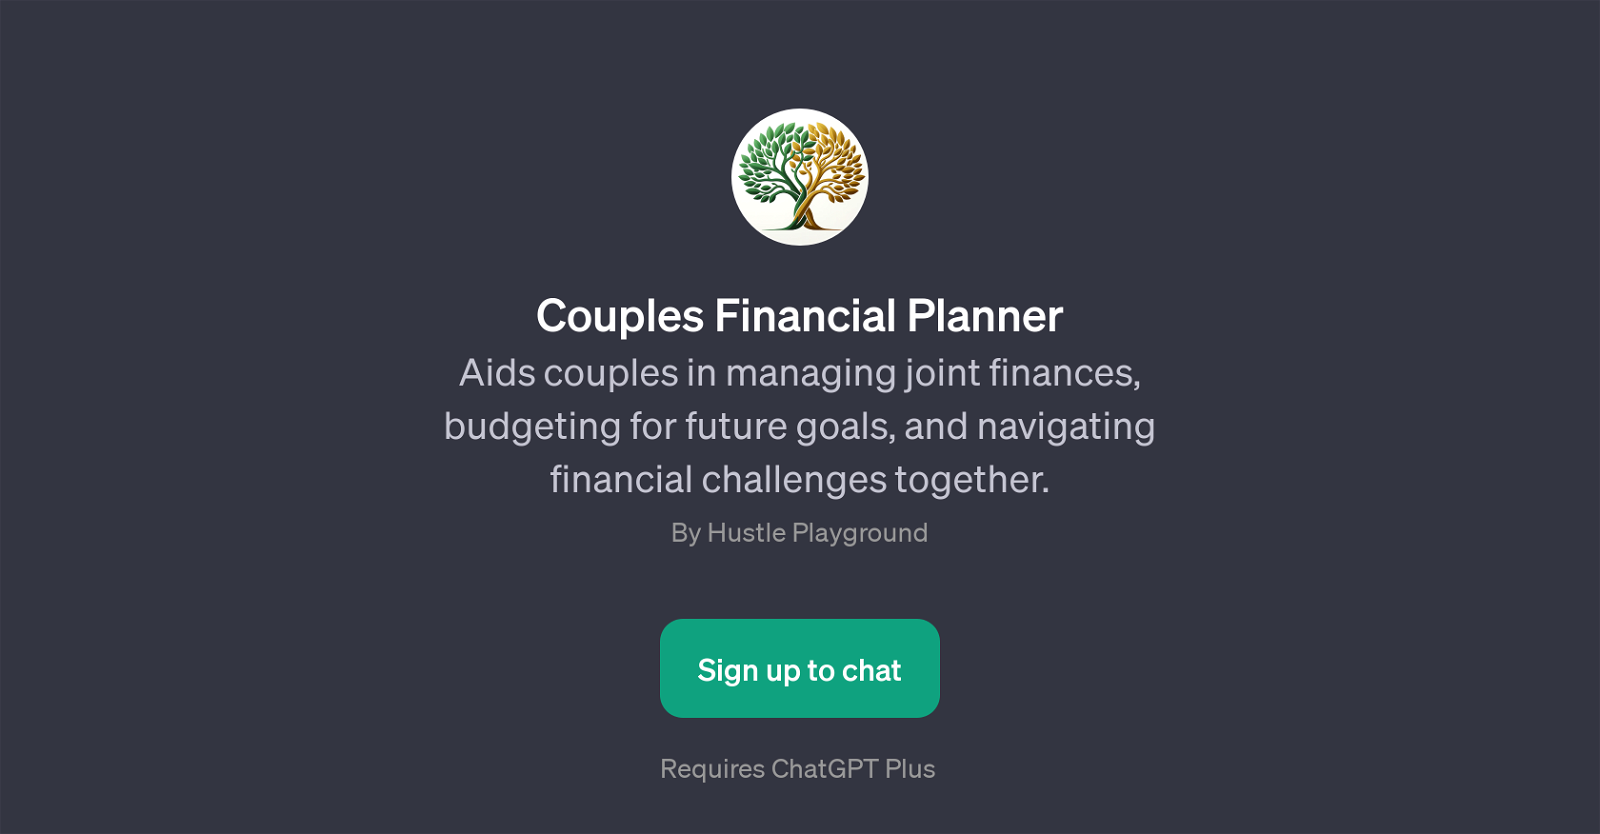 Couples Financial Planner website